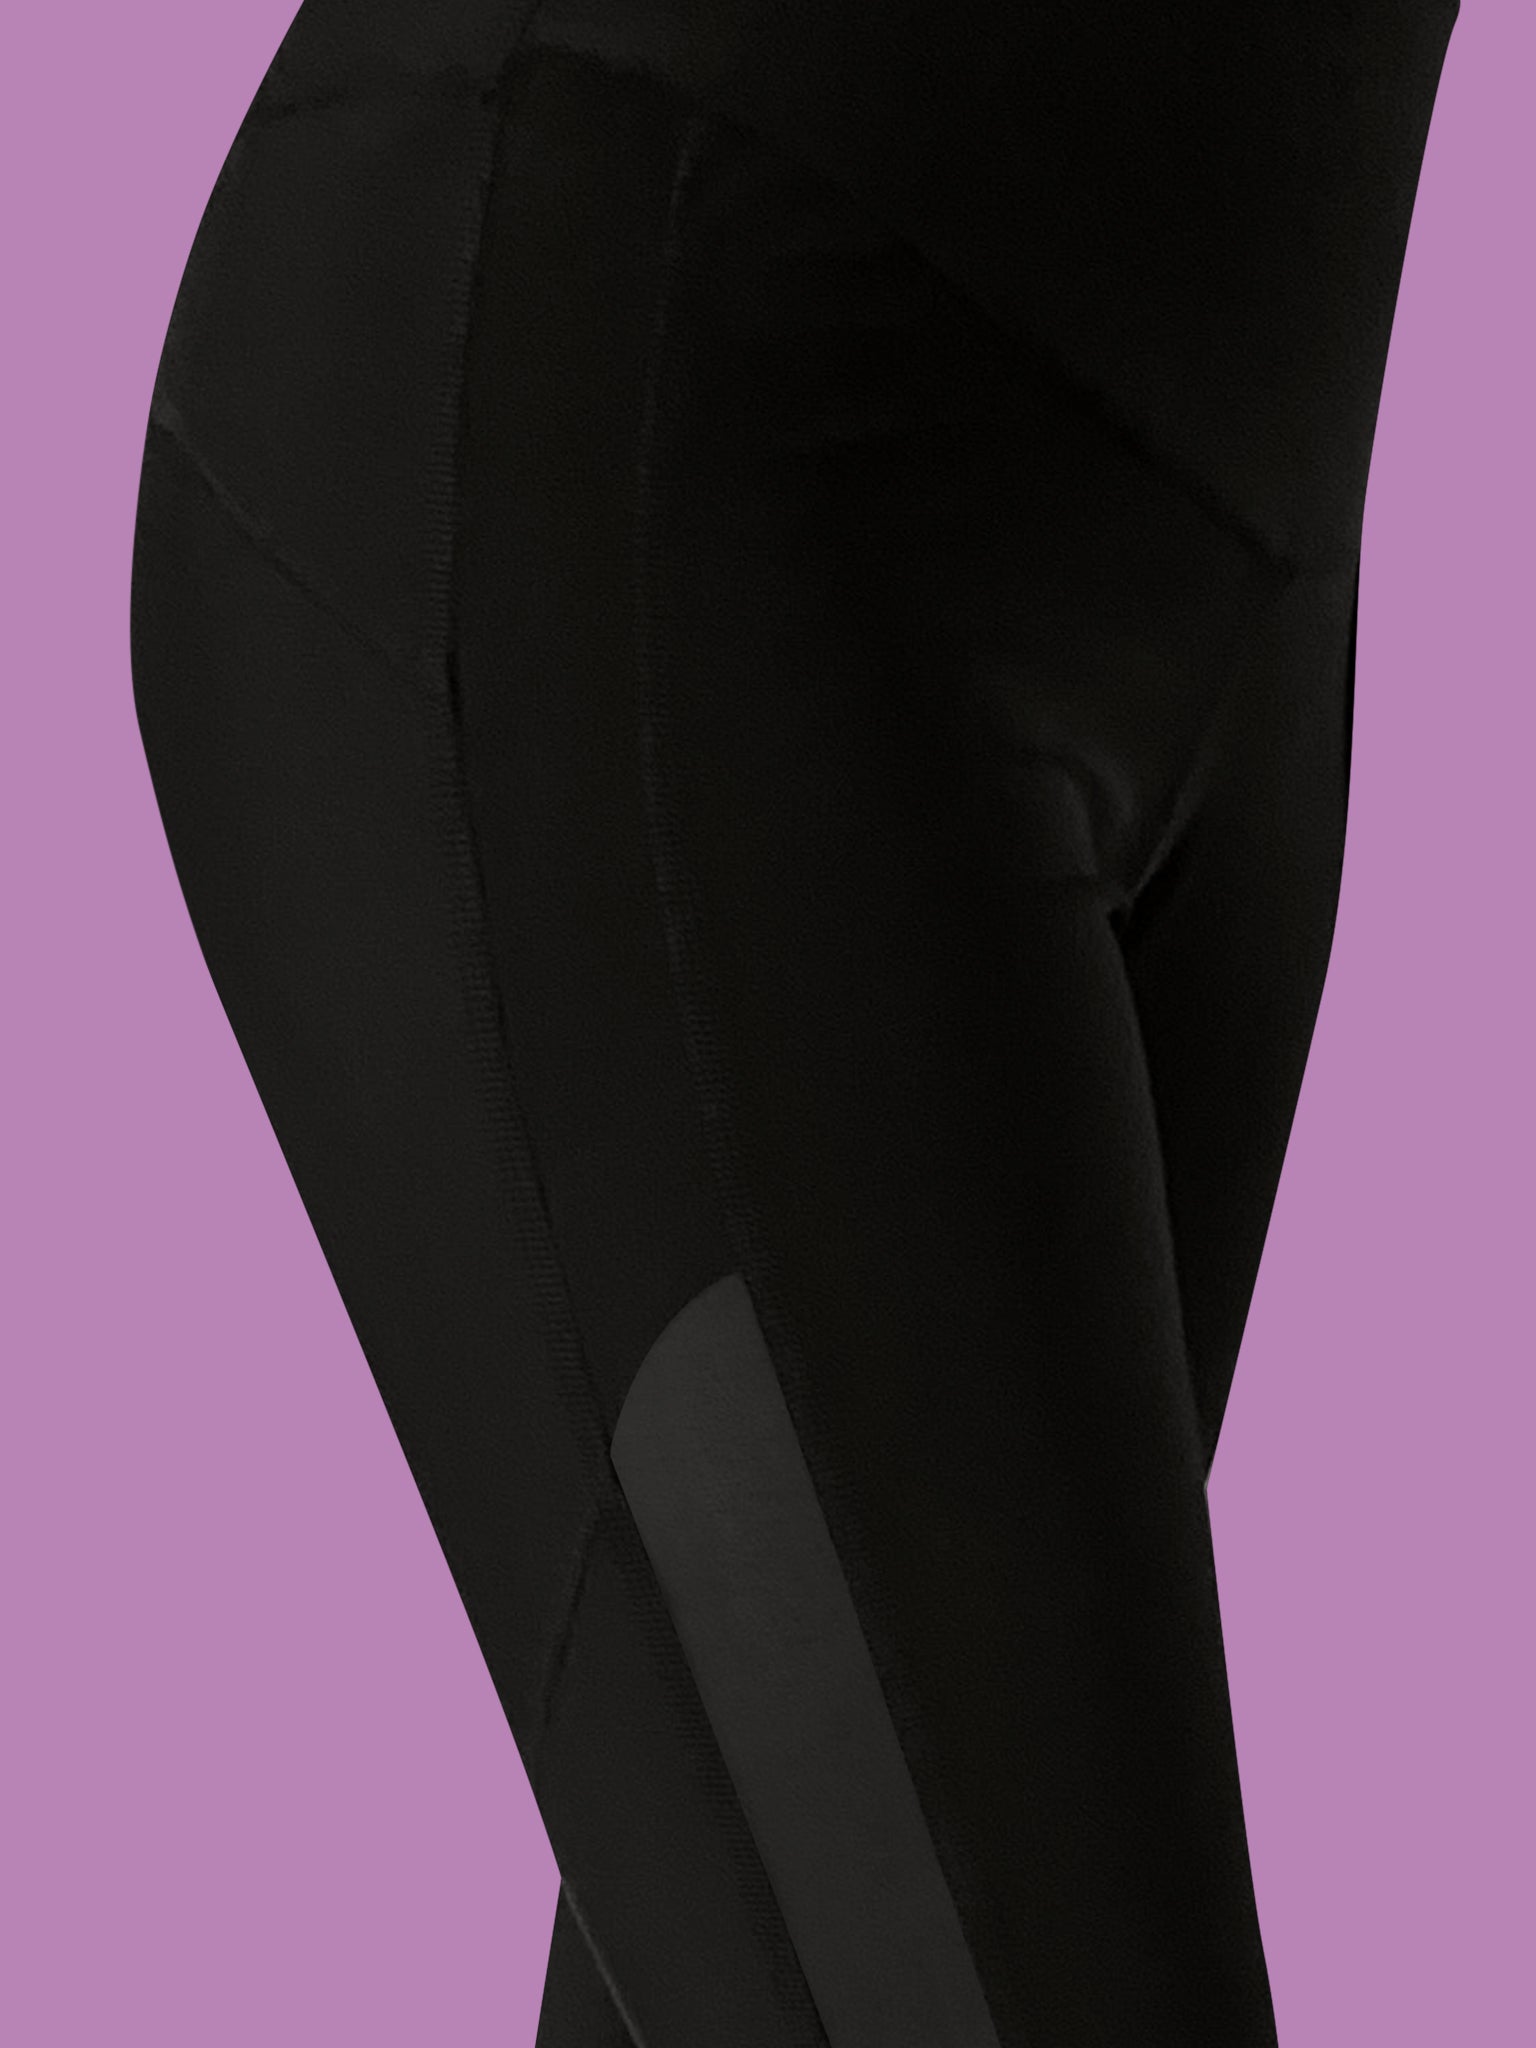 black legging detail